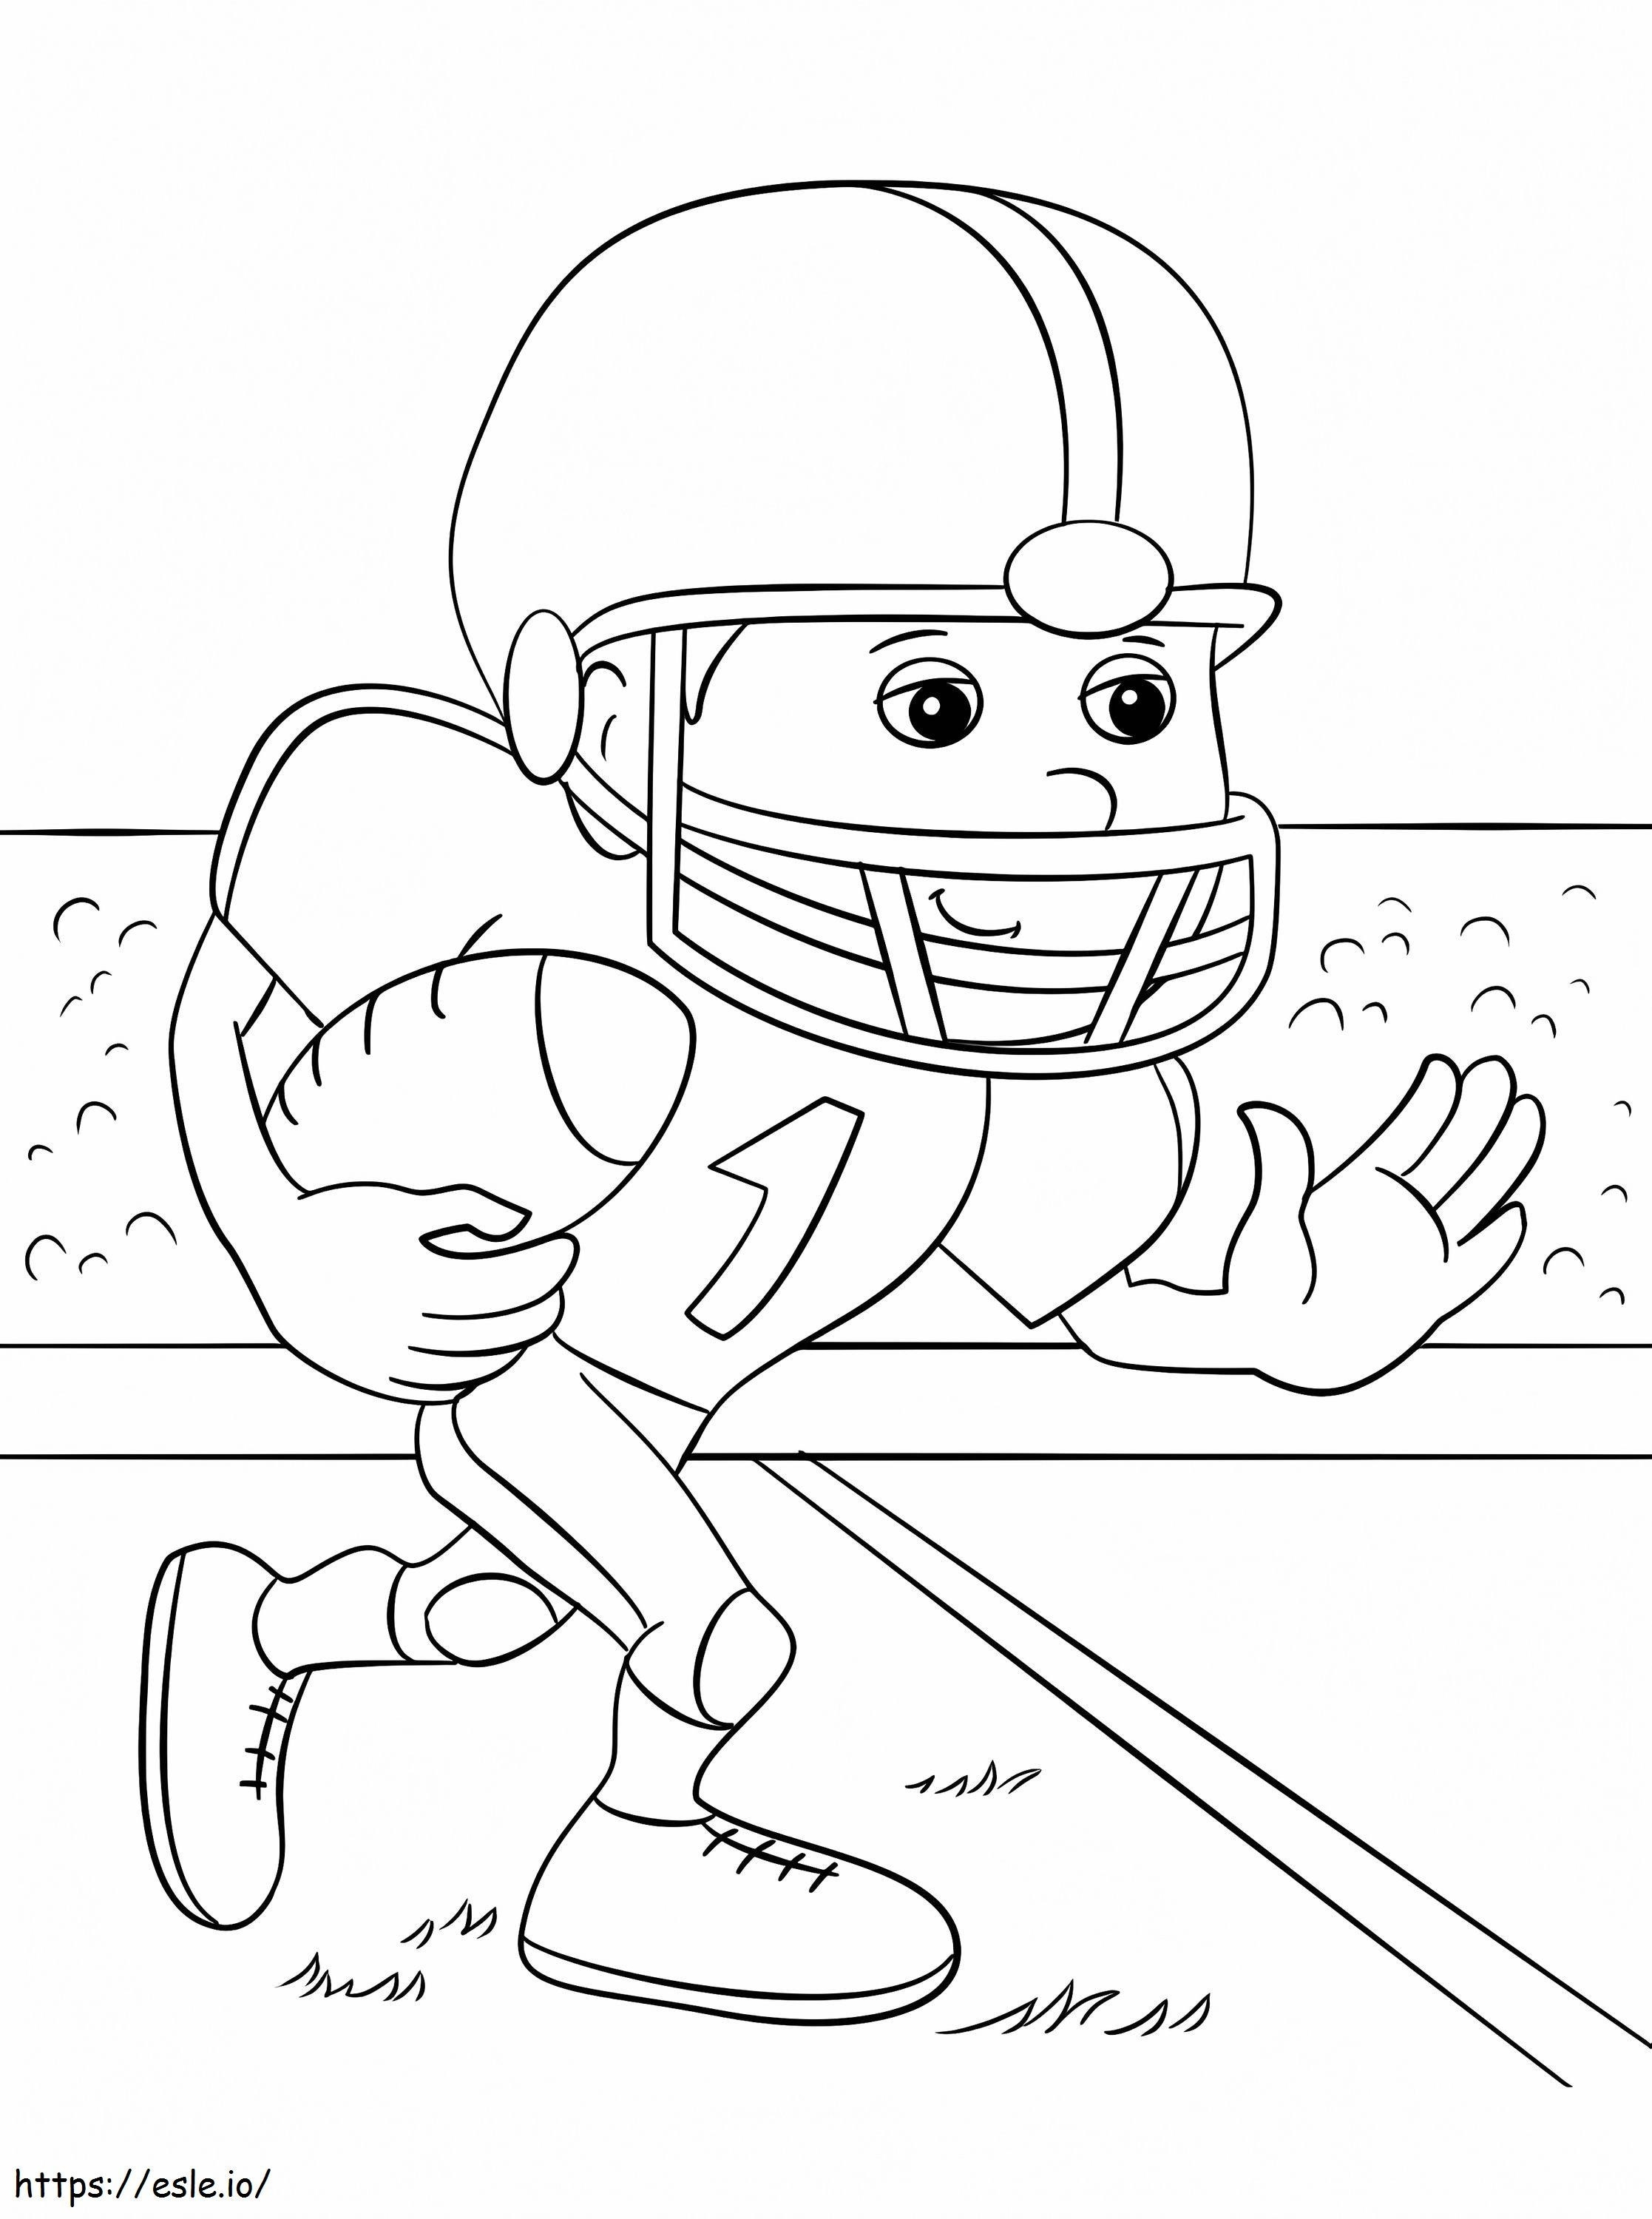 Cartoon Football Running Back coloring page